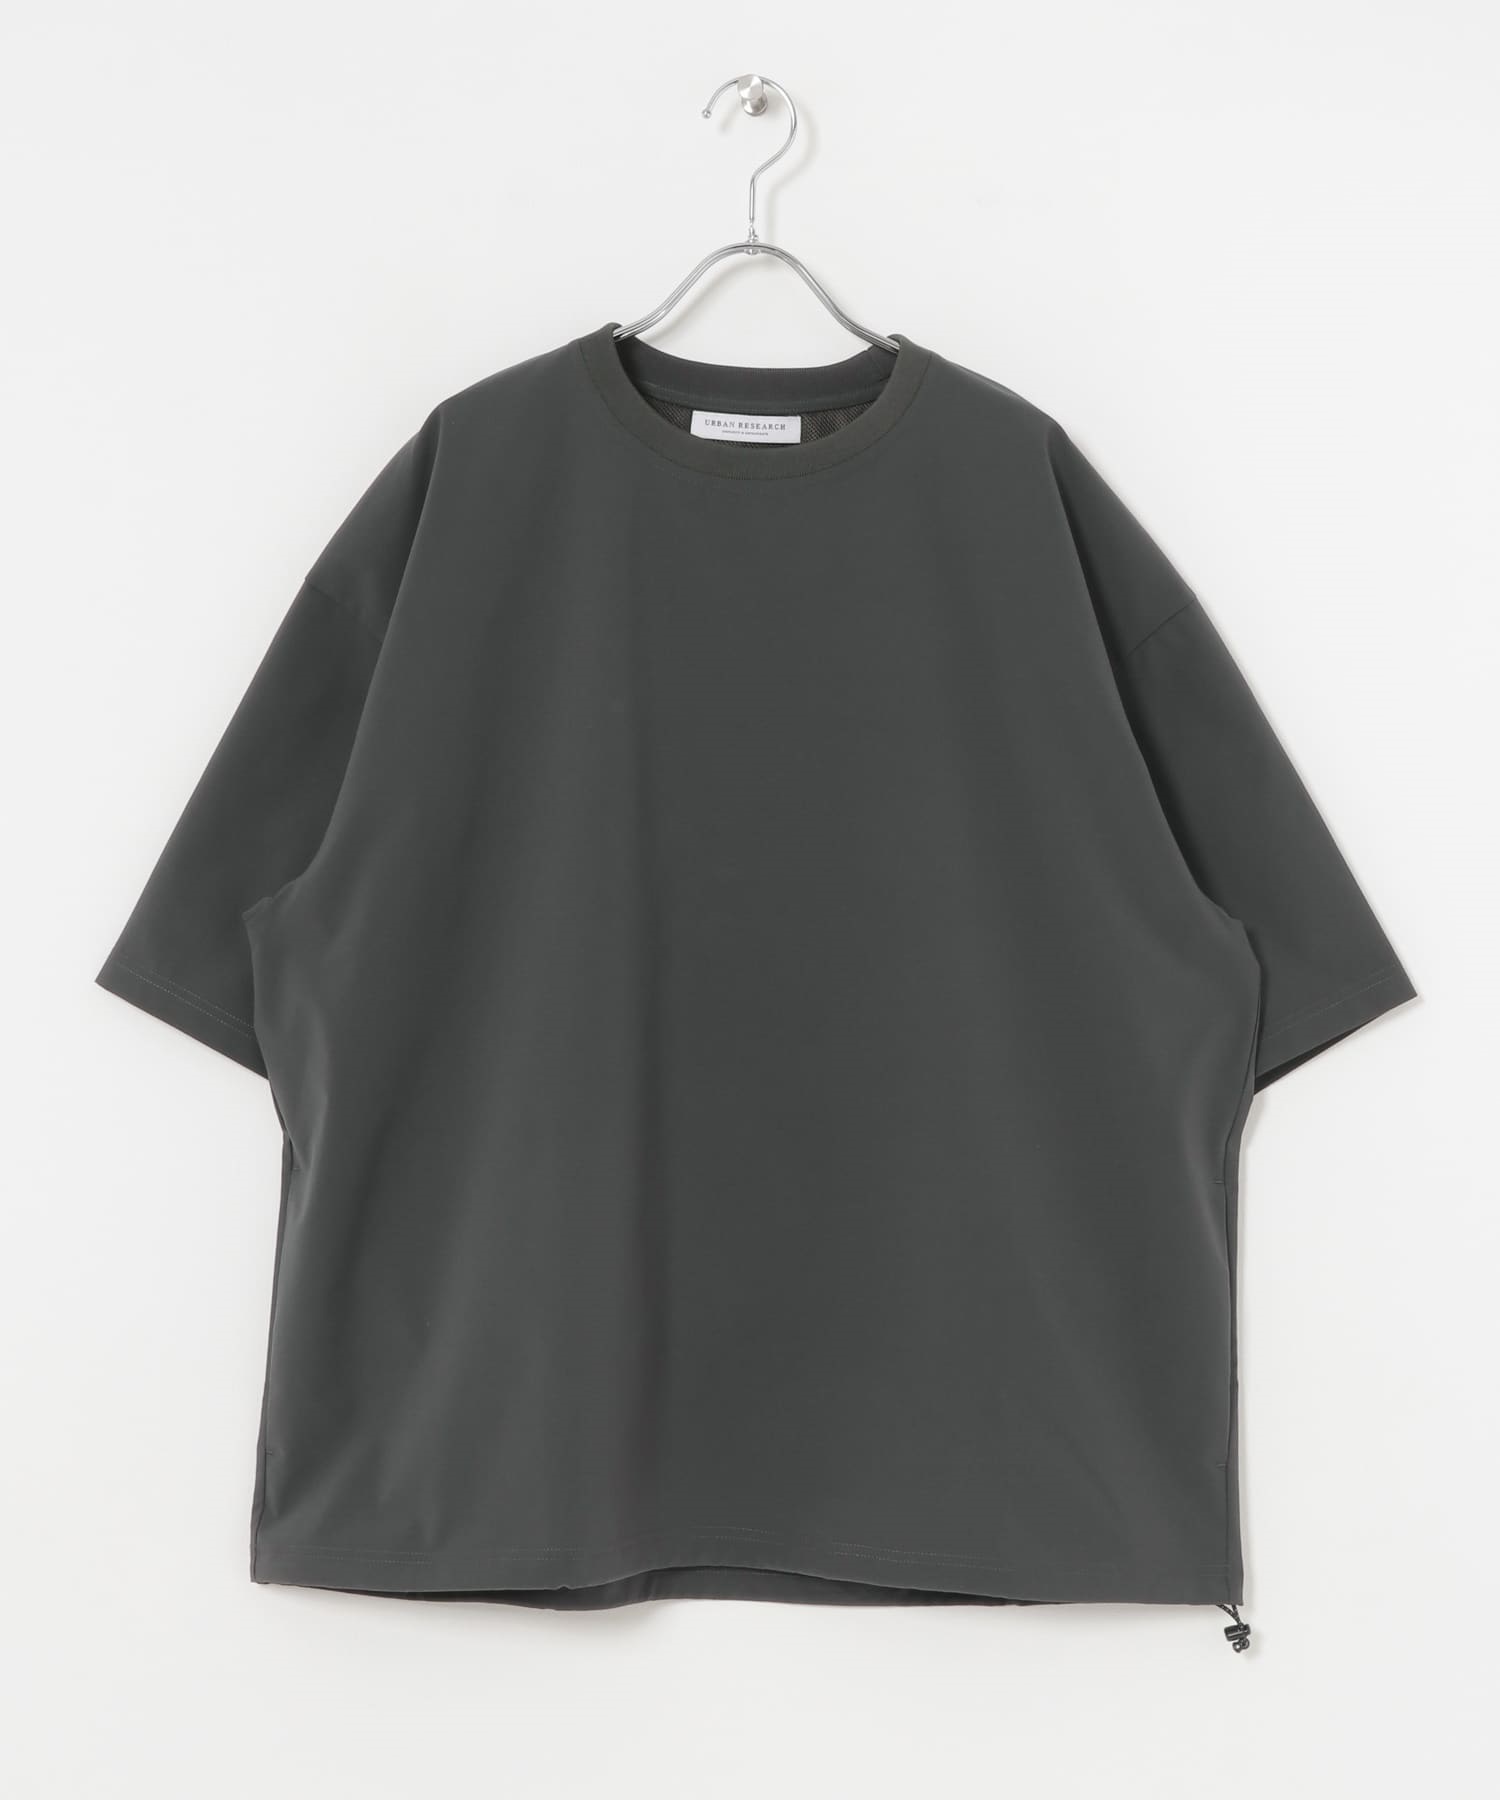 SOLOTEX 高機能短袖T恤(炭灰色-M-CHARCOAL GRAY)